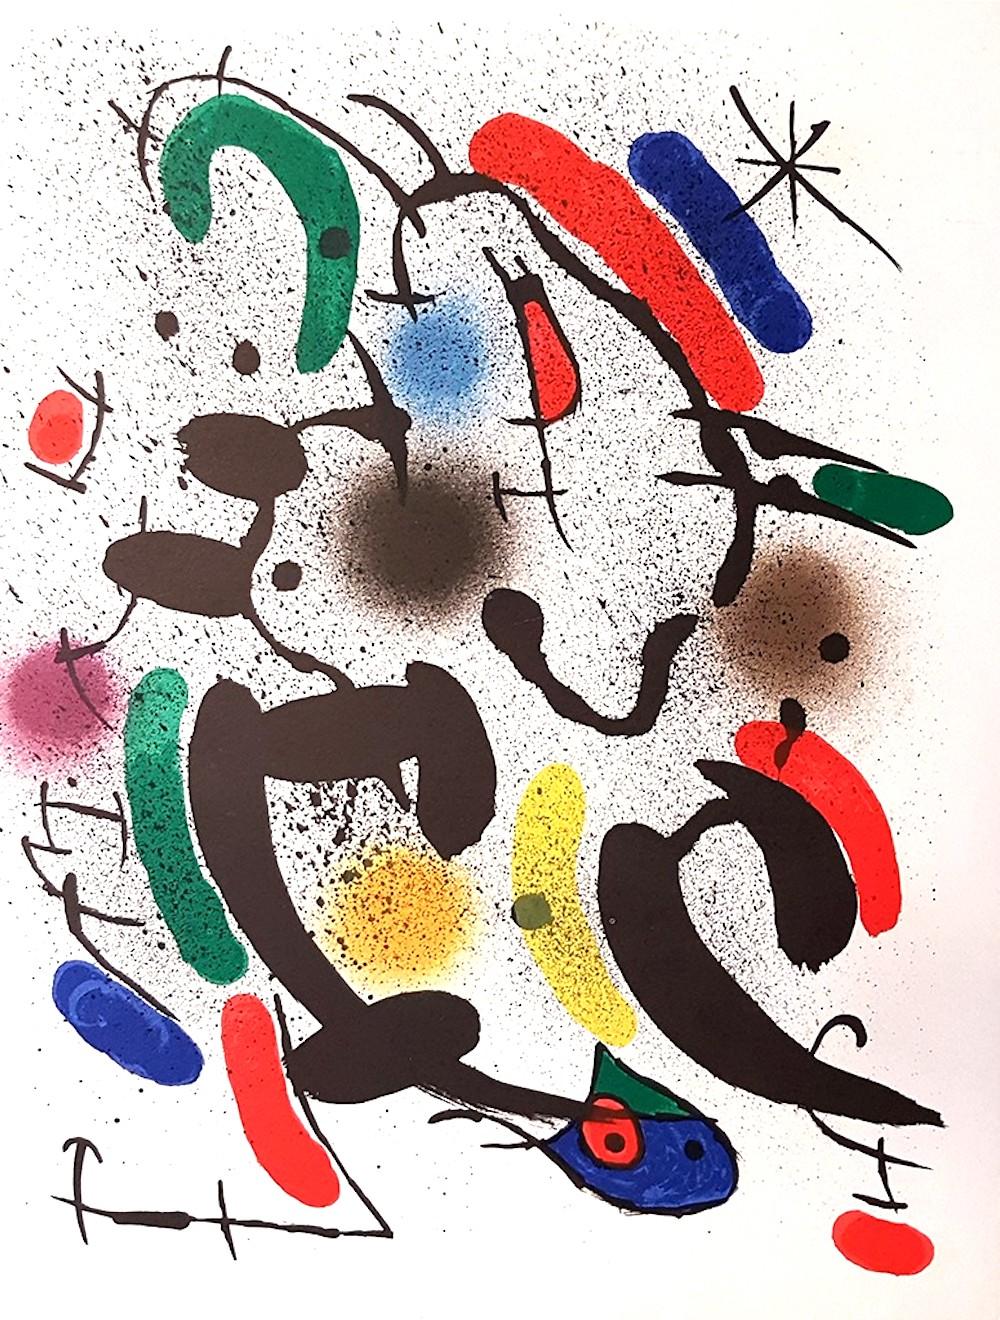 Joan Miró Abstract Print -  Mirò Lithographe I - Plate VI - Original Lithograph by Joan Mirò - 1972